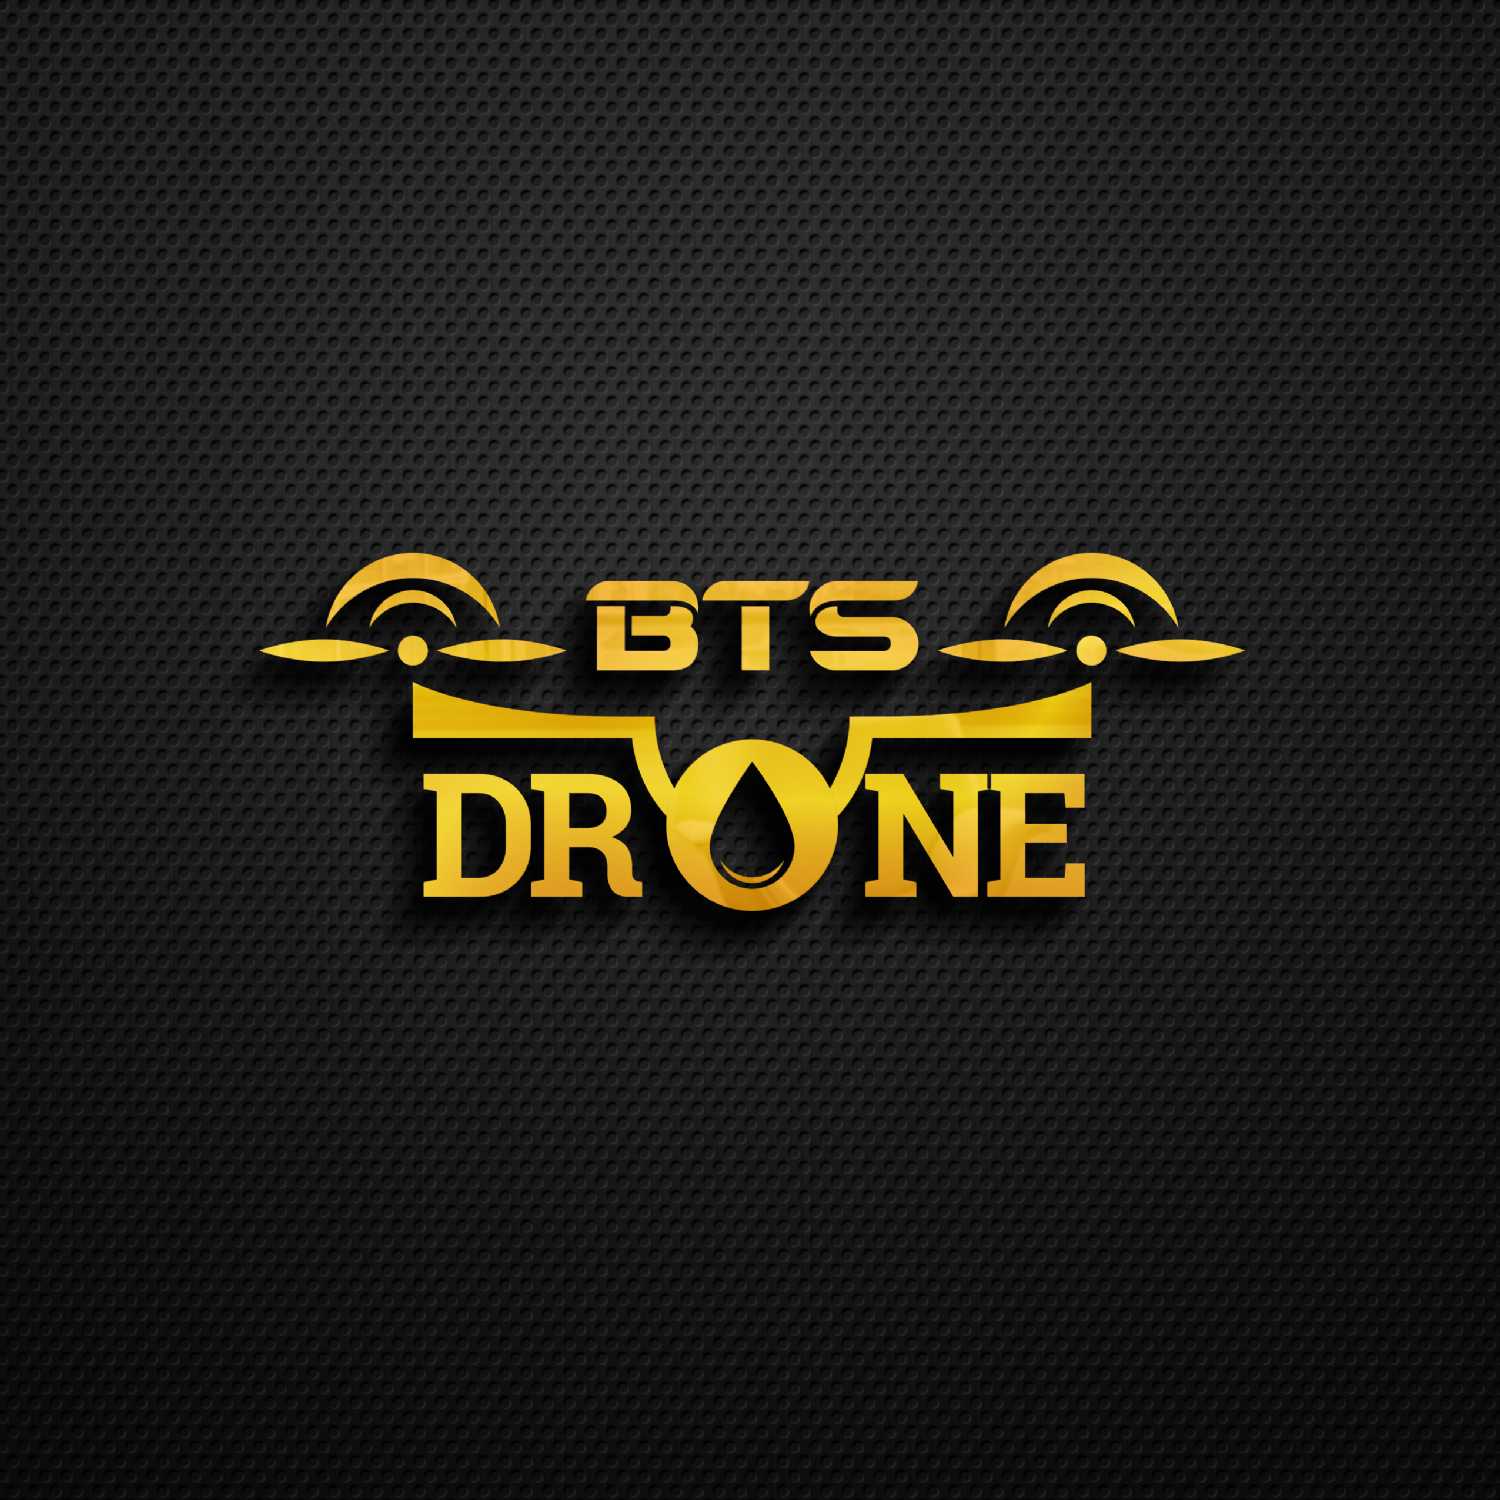 BTS Drone Tarımsal İlaçlama Logo